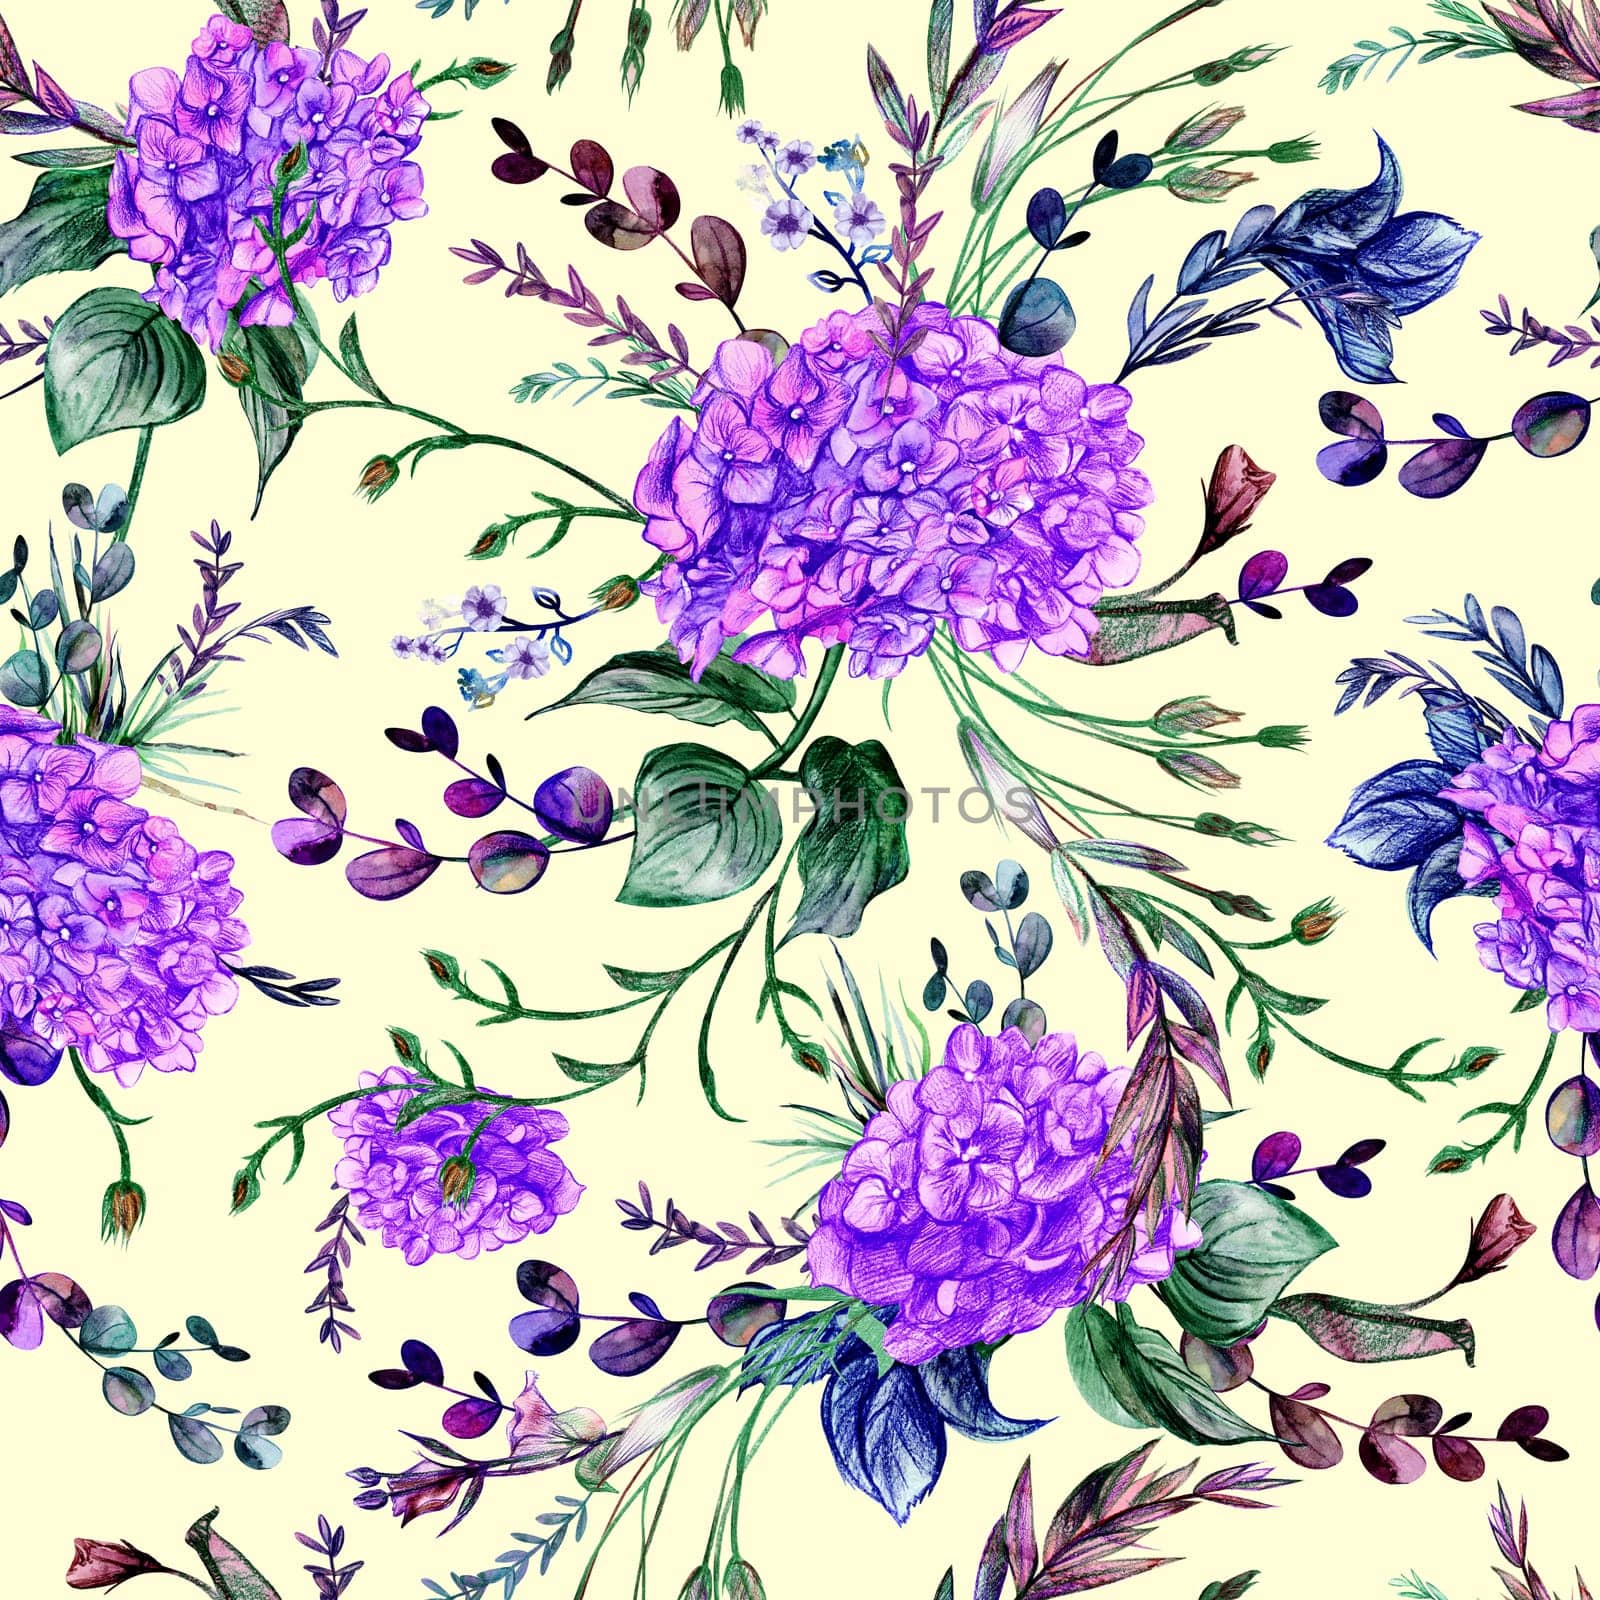 Cute botanical seamless pattern with purple hydrangea flowers on a light yellow backdrop by MarinaVoyush